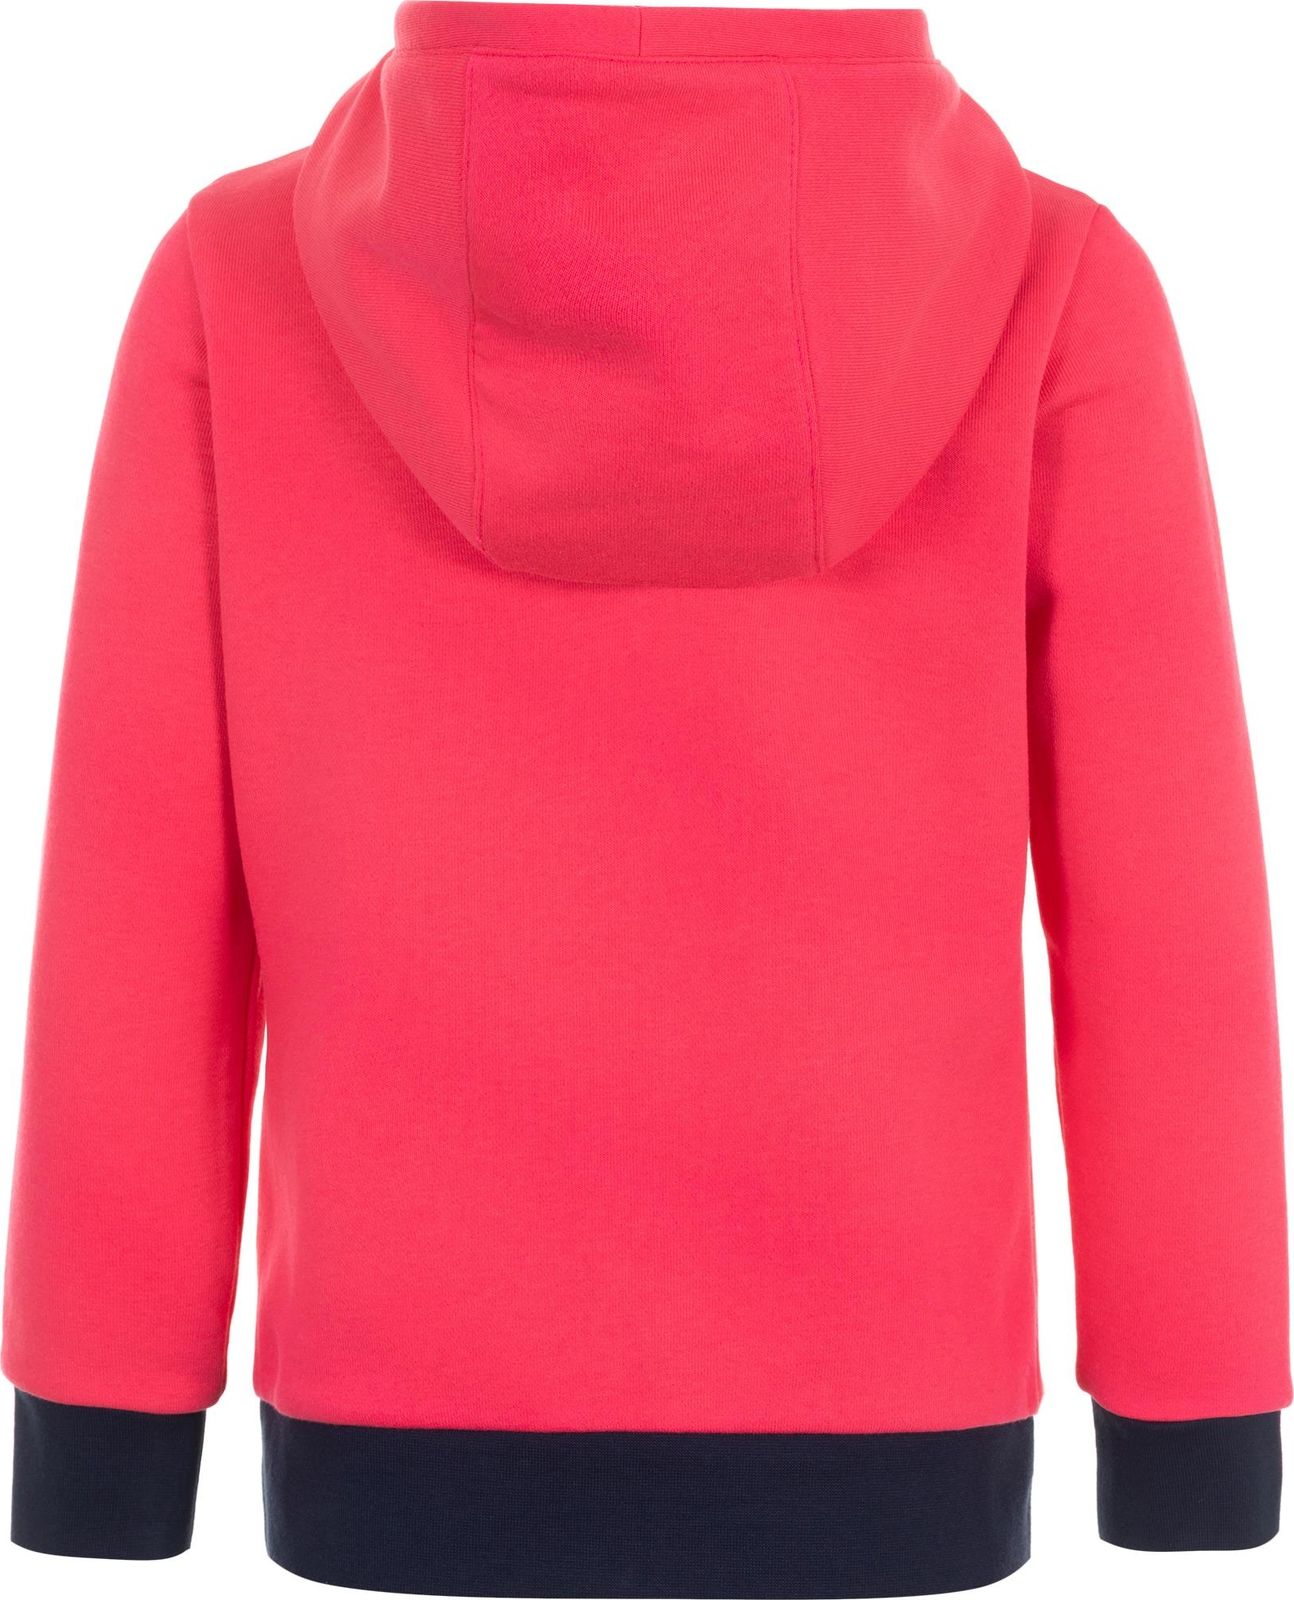    Fila Girls' Knitted Jacket, : . S19AFLJUK01-R0.  116